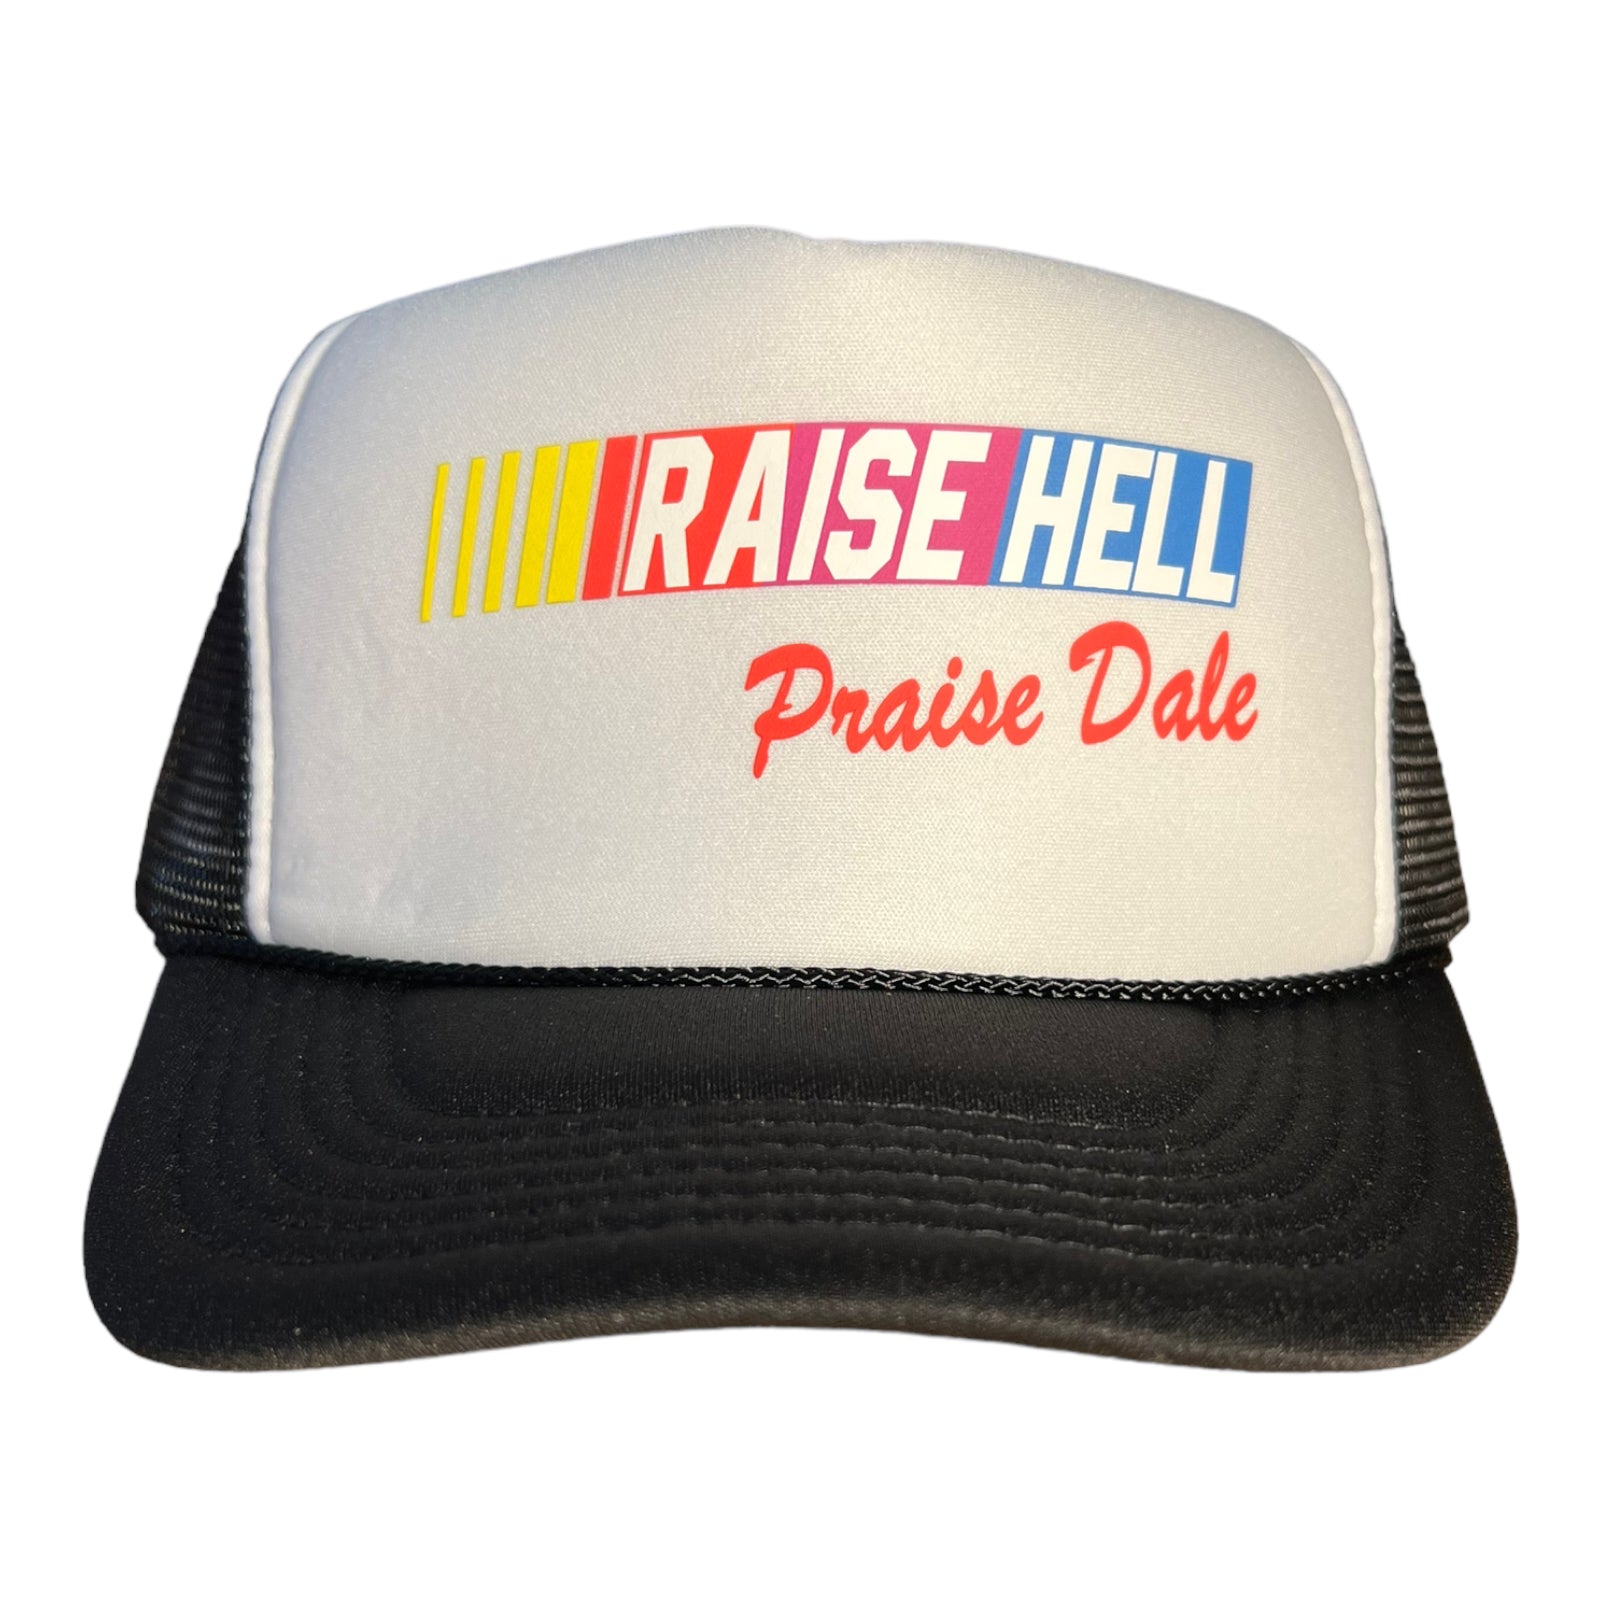 Raise Hell Praise Dale Trucker Hat Funny Trucker Hat Black/White Hat ...